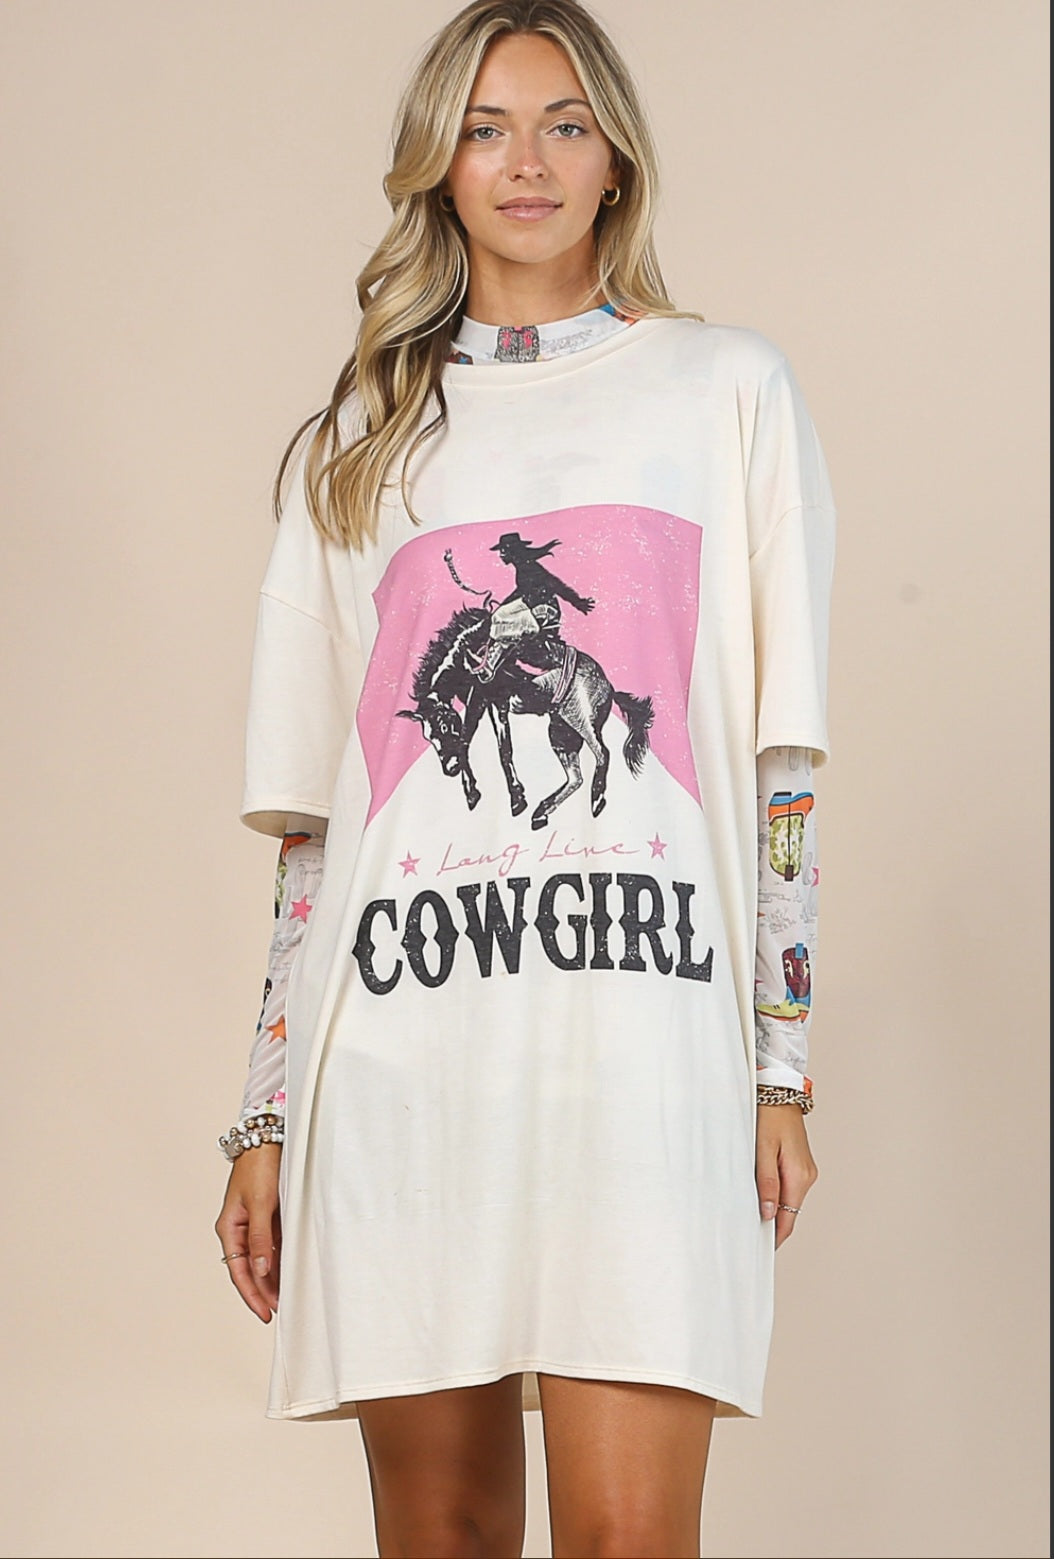 Long live cowgirl Tee dress